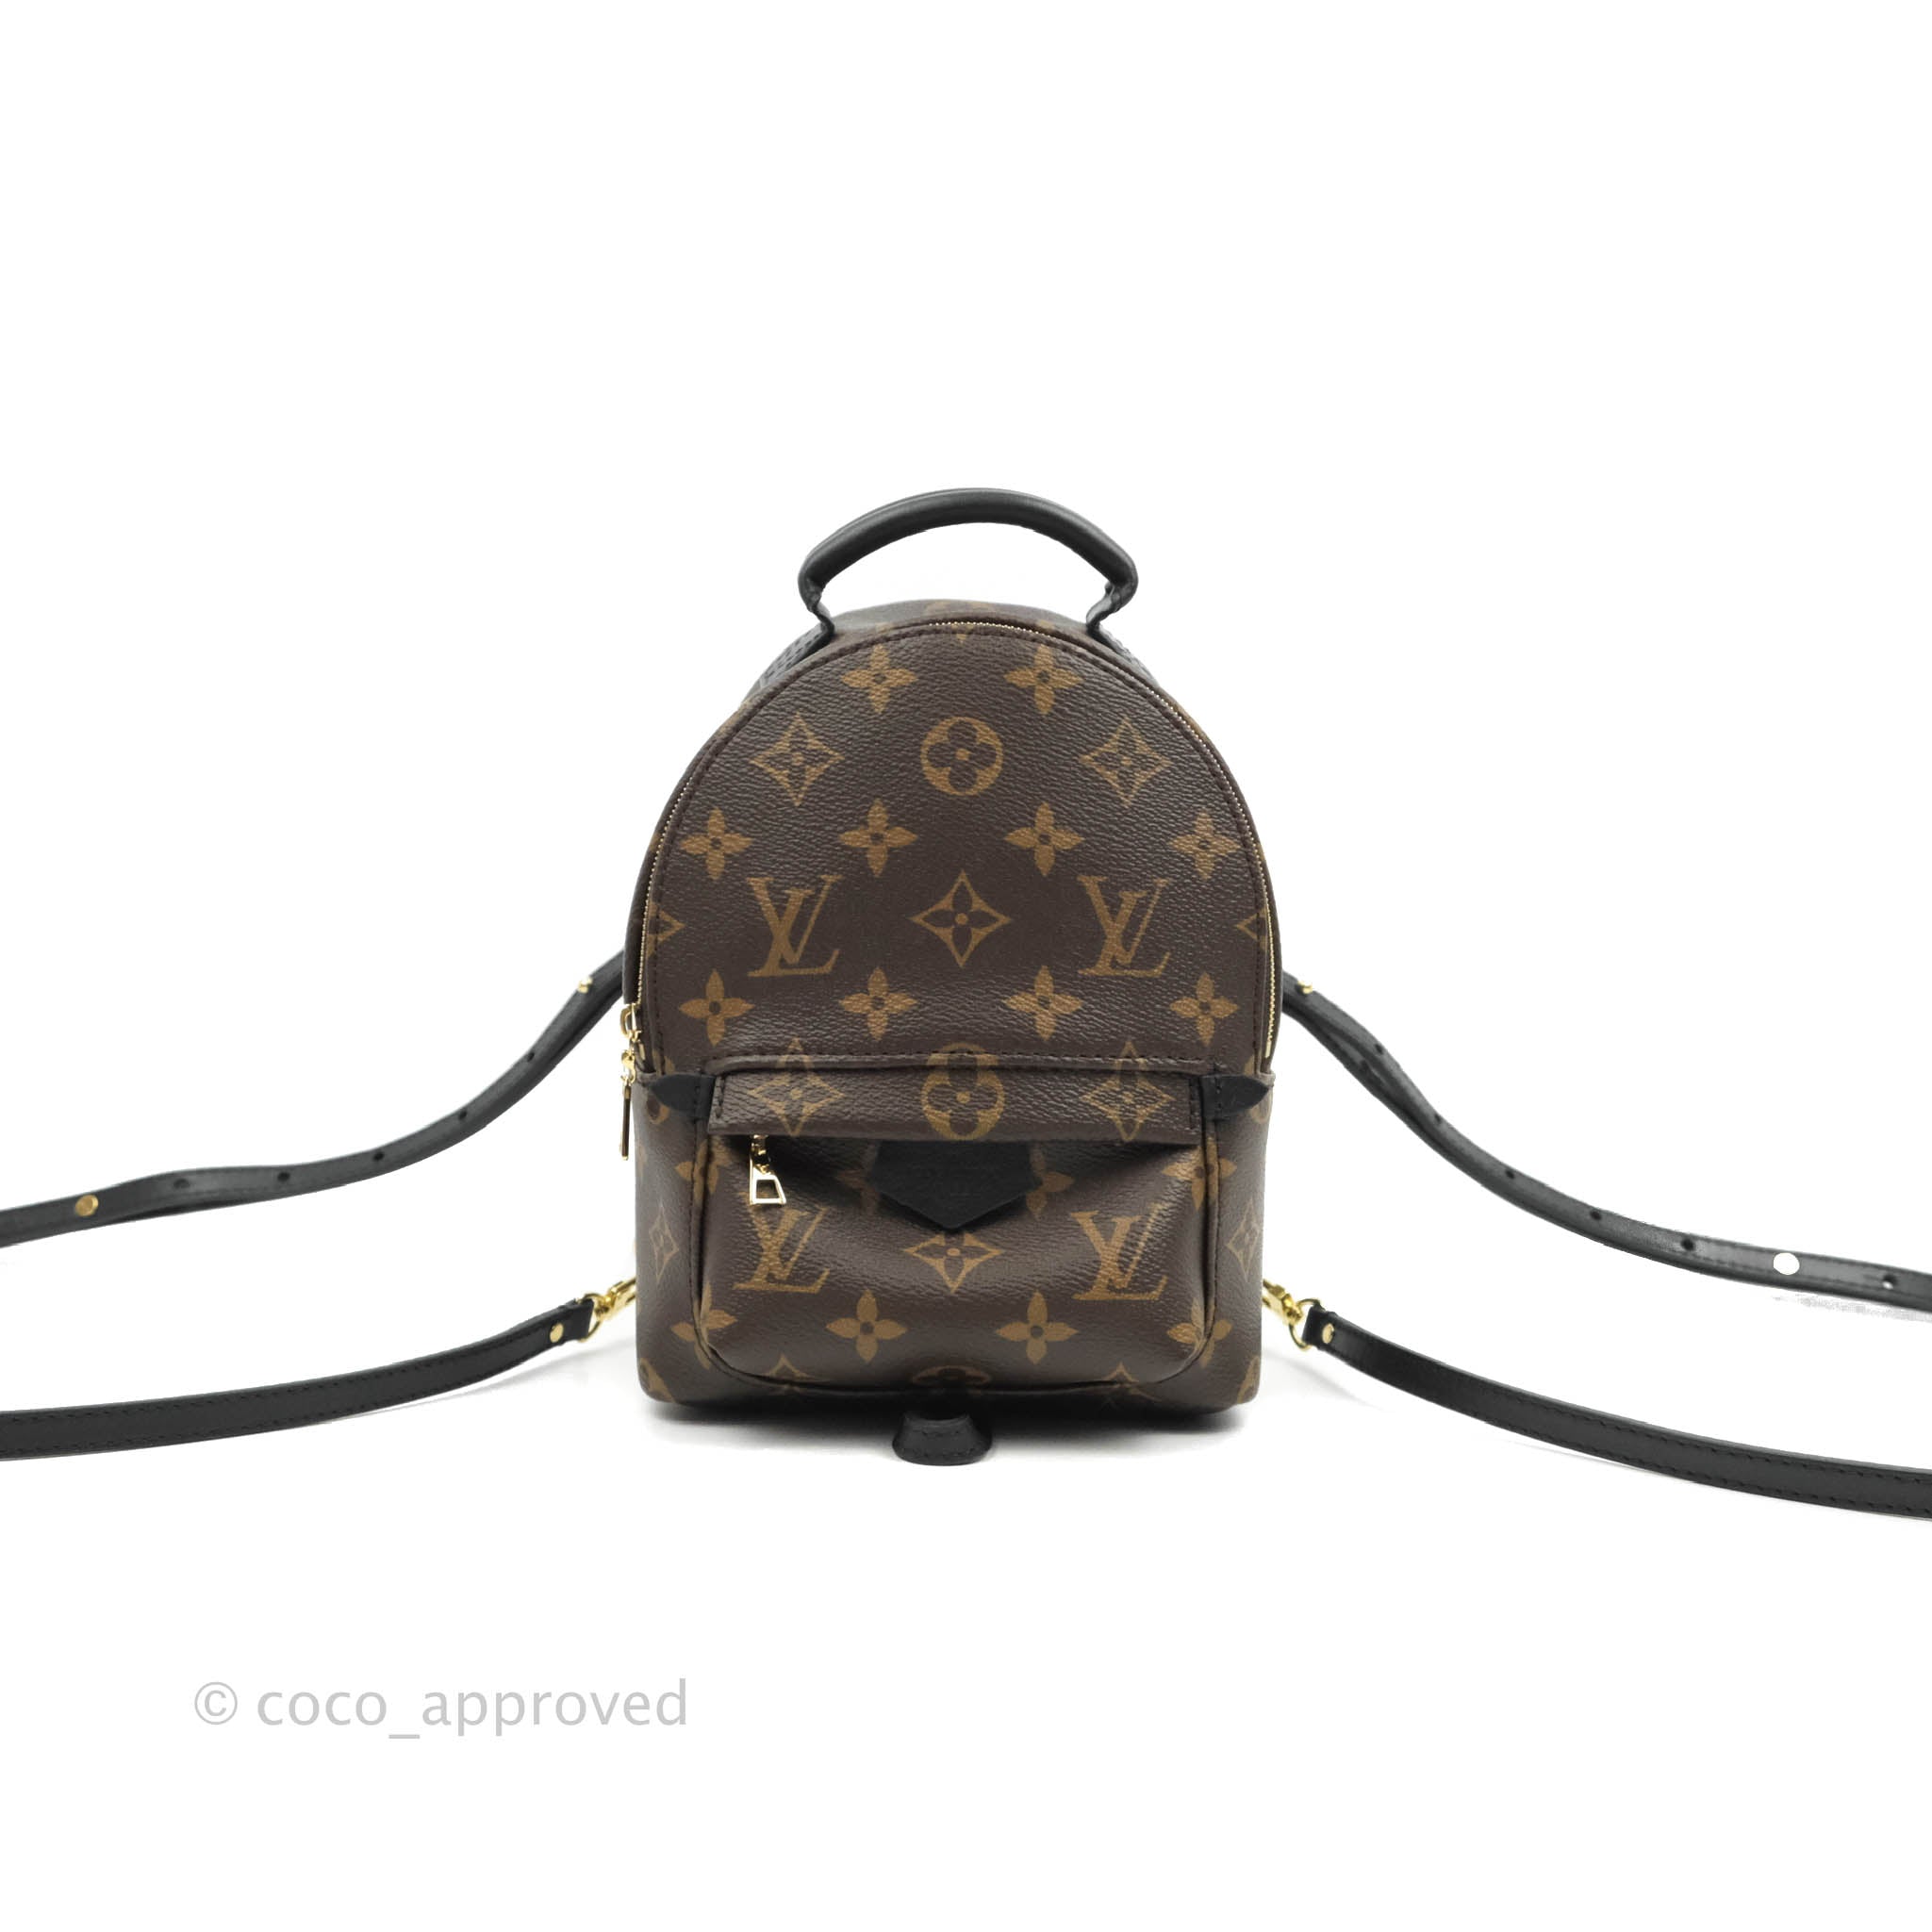 Black Louis Vuitton Backpack - 74 For Sale on 1stDibs  lv backpack black, louis  vuitton black backpack, lv black backpack